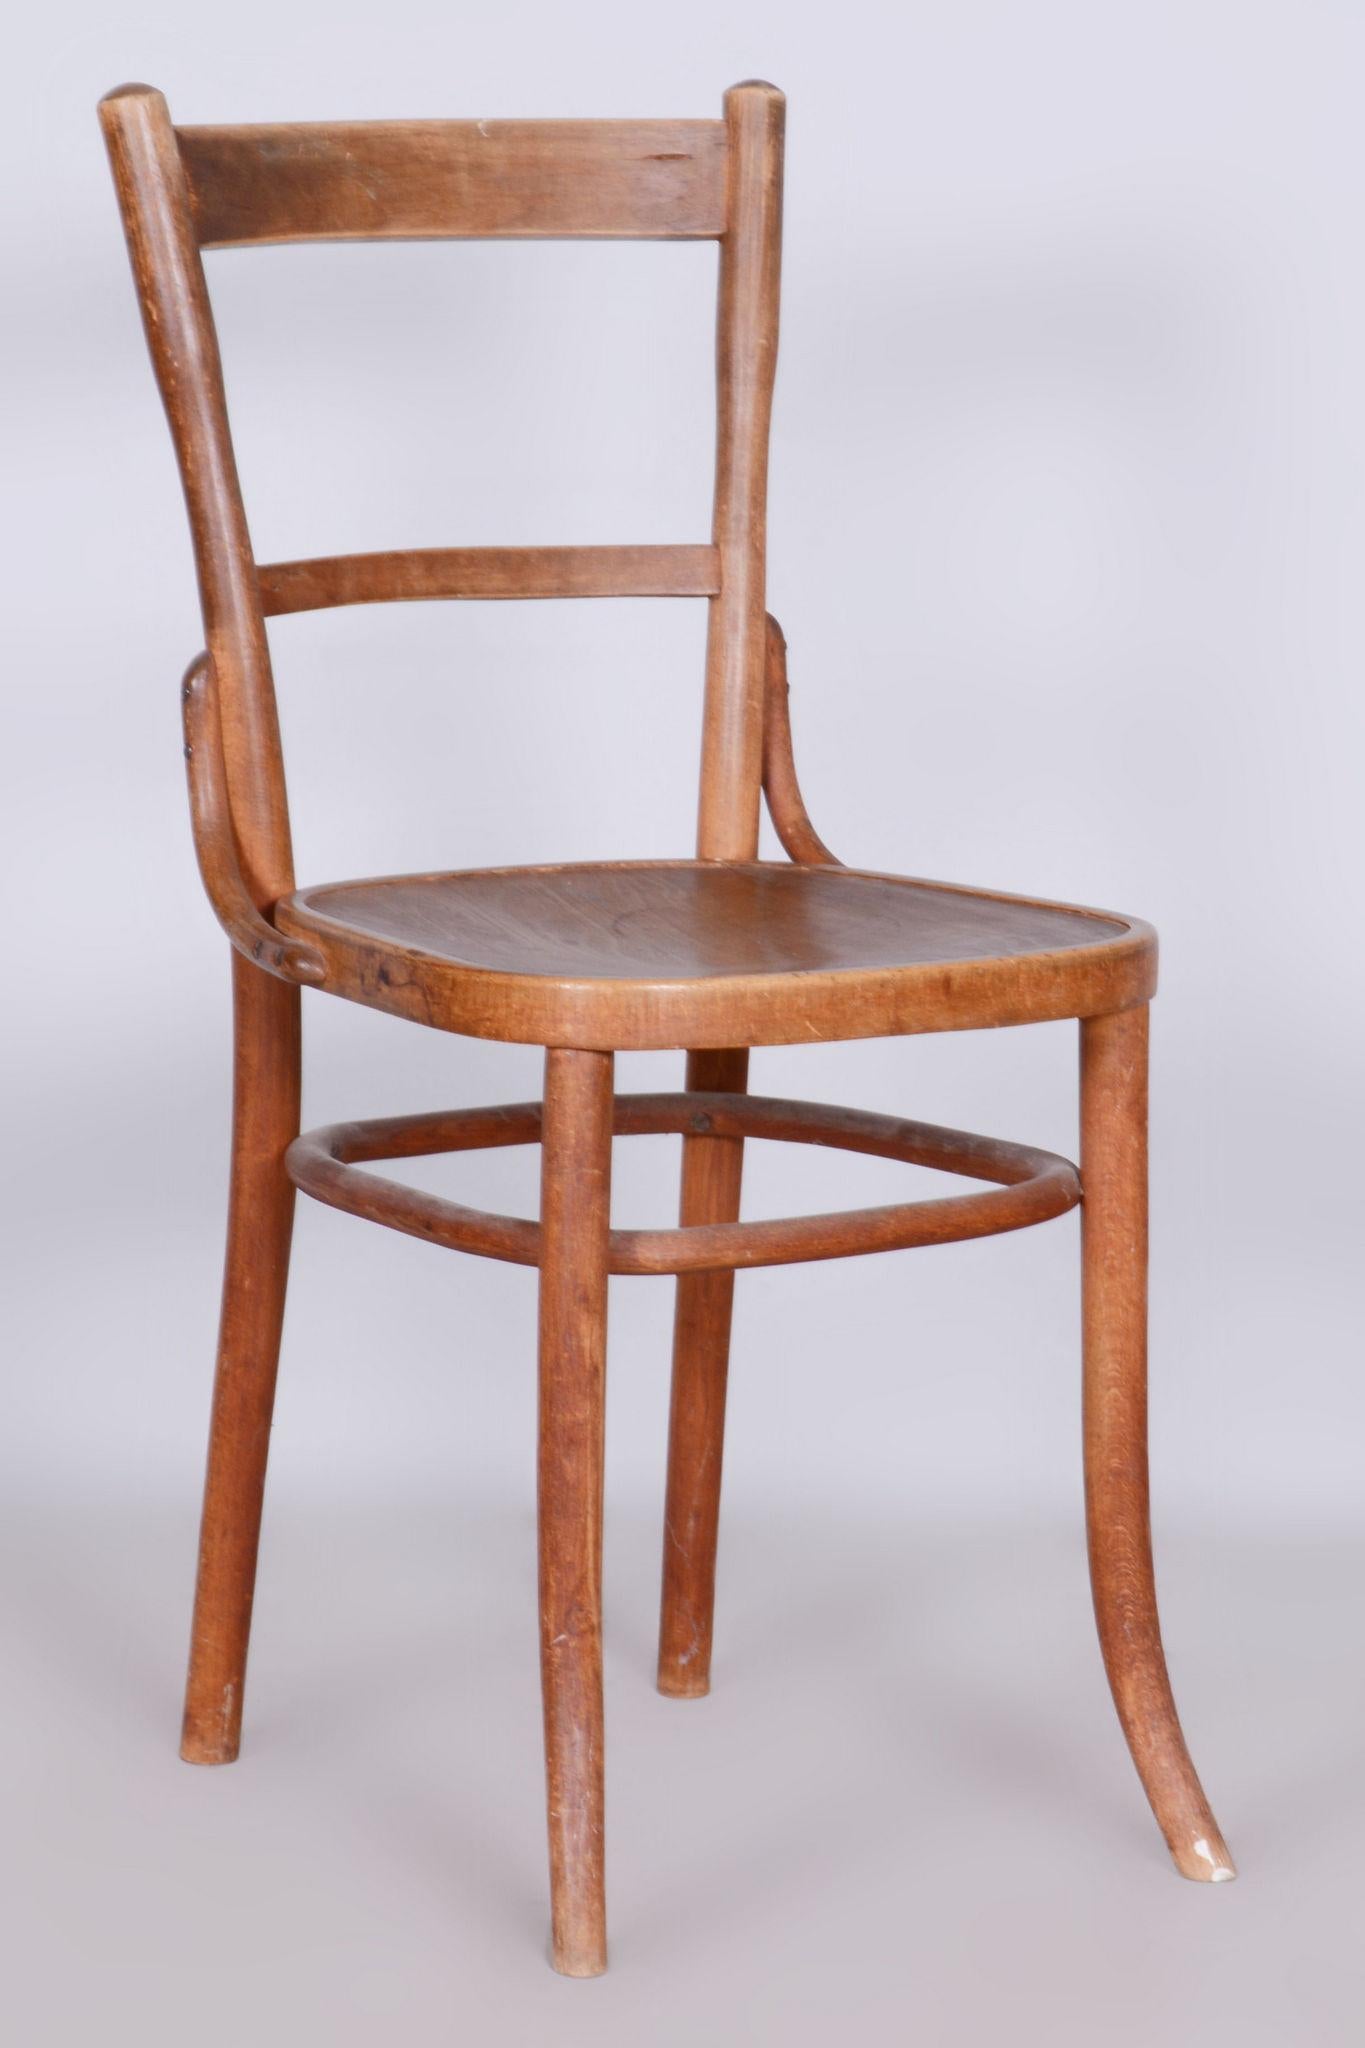 Original Art Deco Beech Chair, Fischel, Stable Construction, Czechia, 1920s For Sale 4